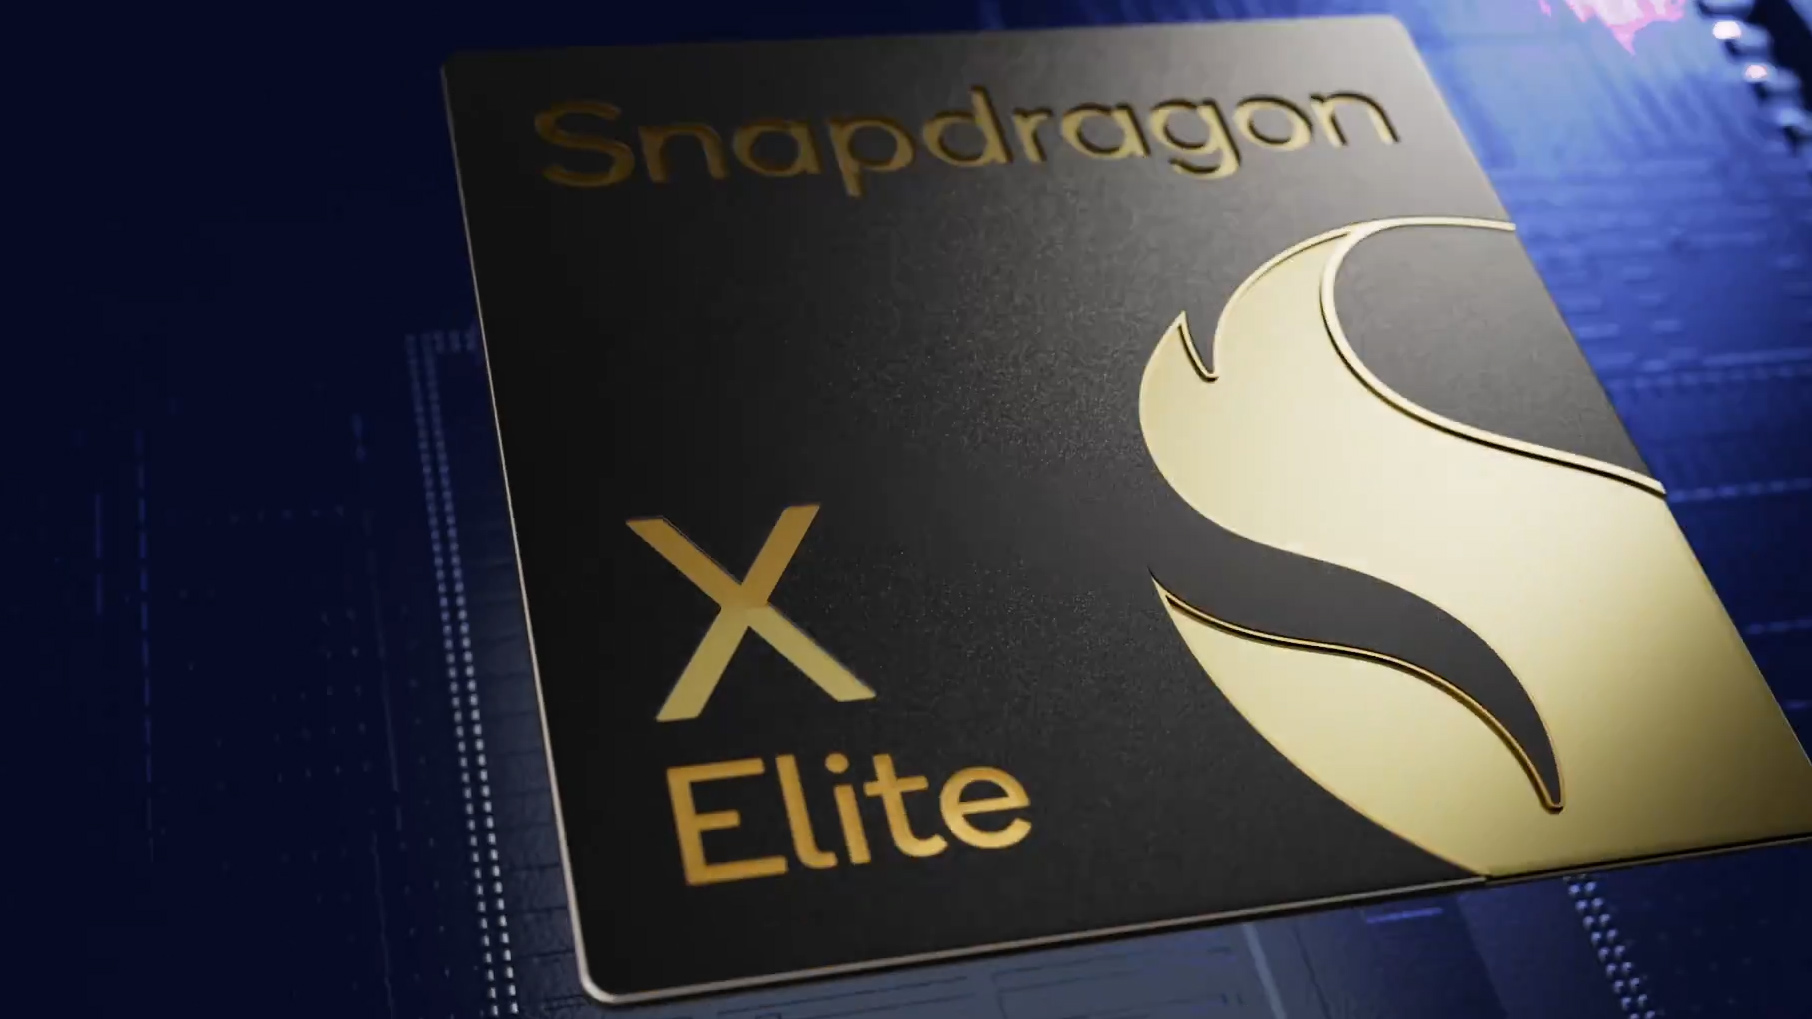 Snapdragon-X-Elite.jpg